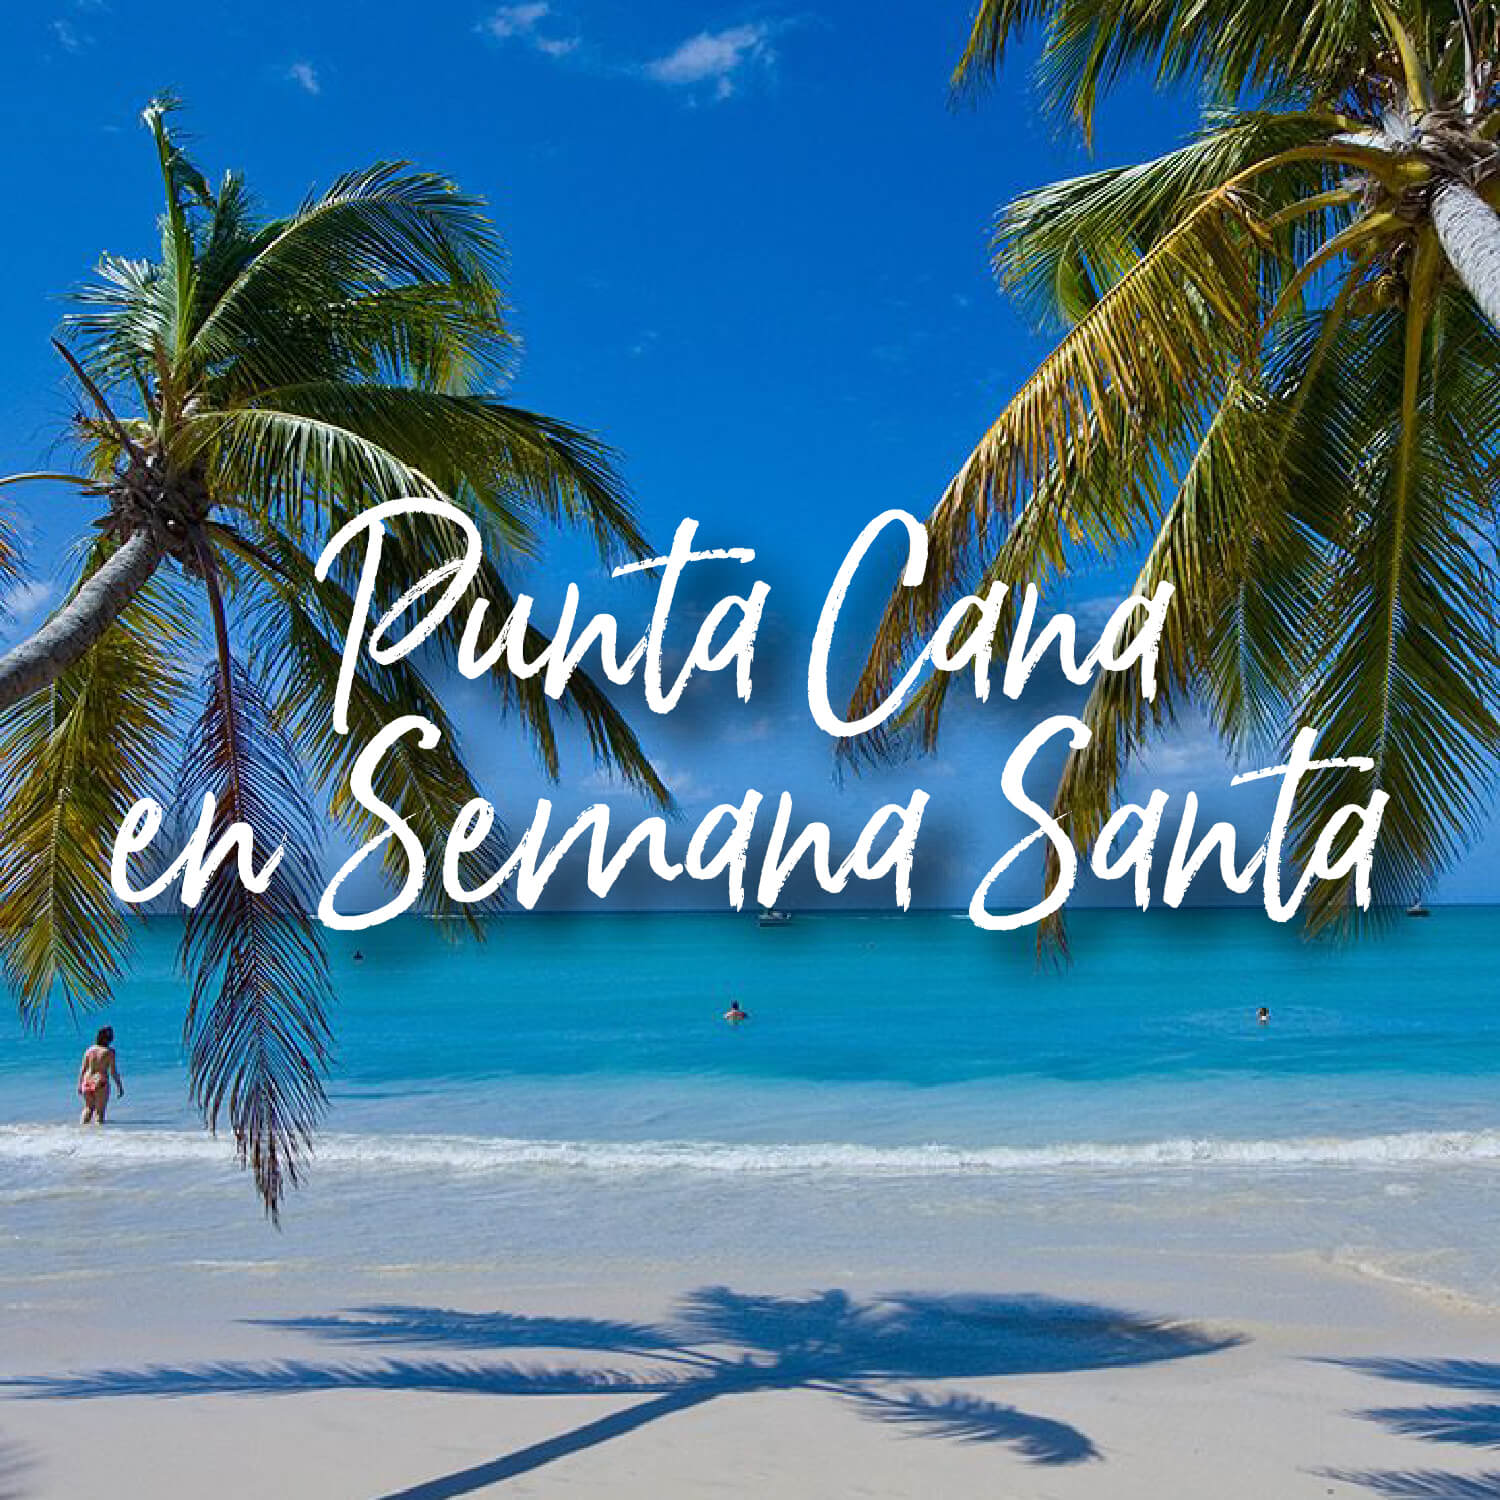 Punta Cana en Semana Santa